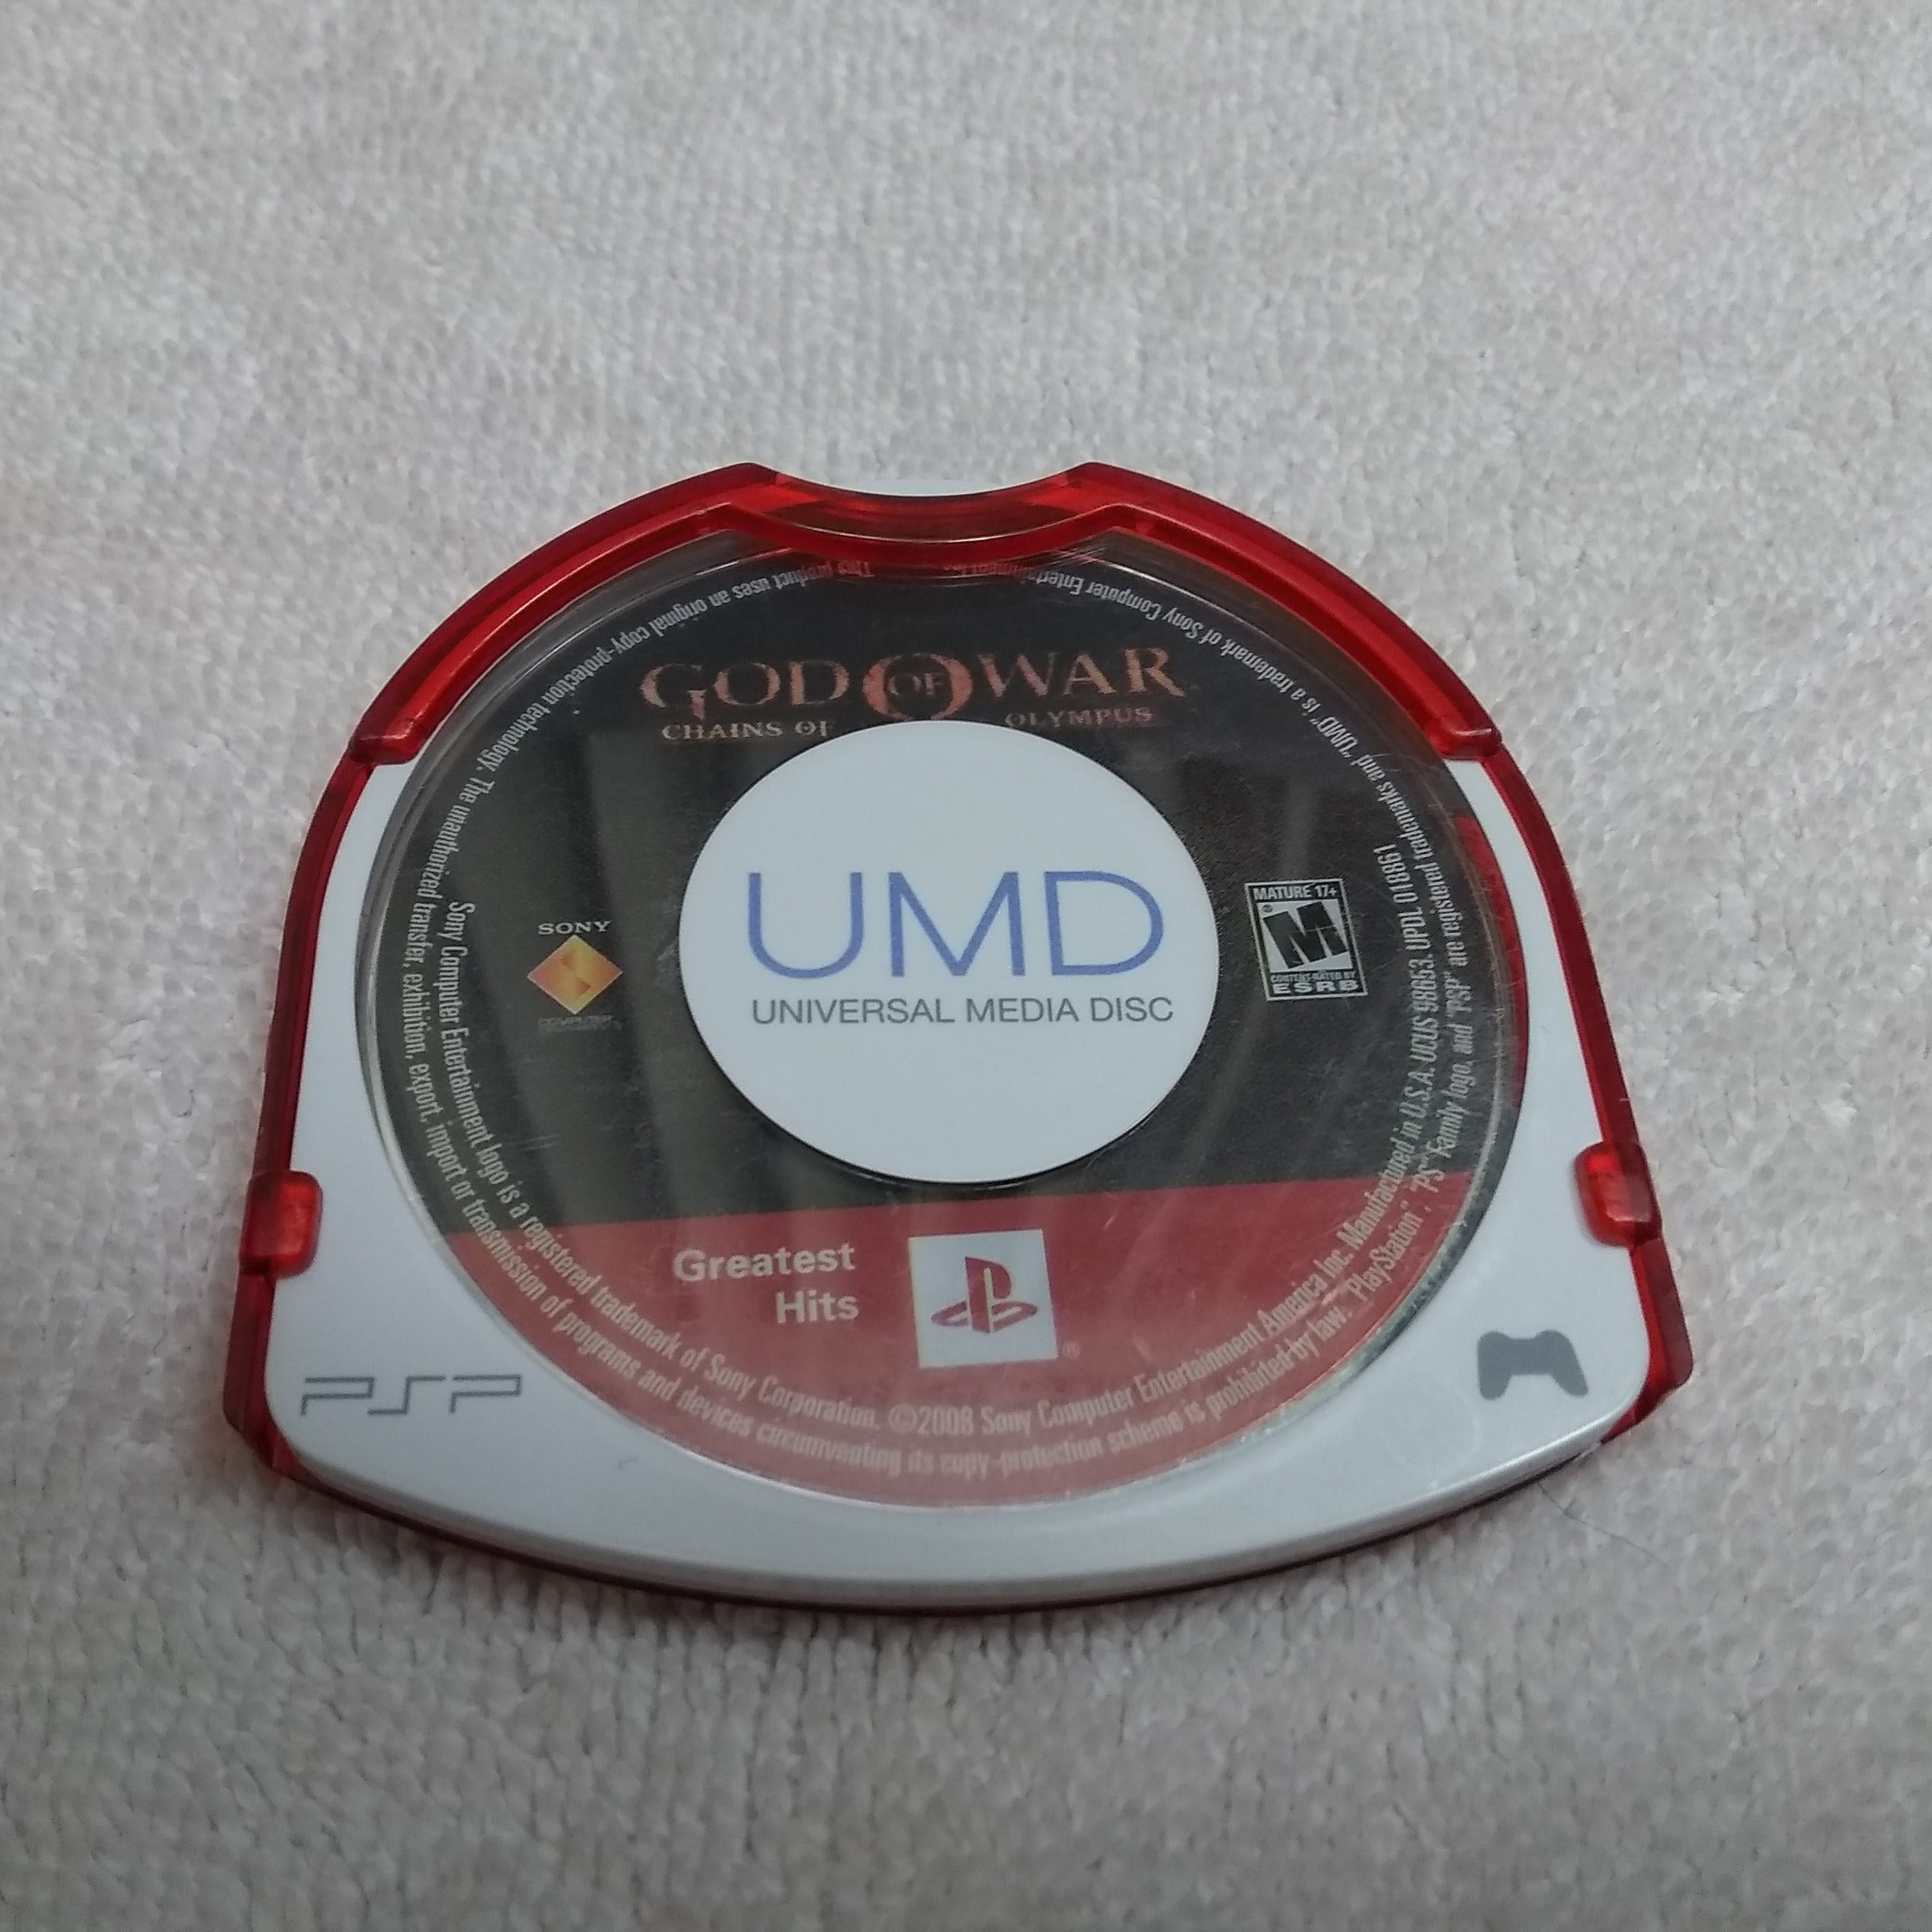 God of War Chains of Olympus GH Clear UMD Sony PSP Disc/Cartridge